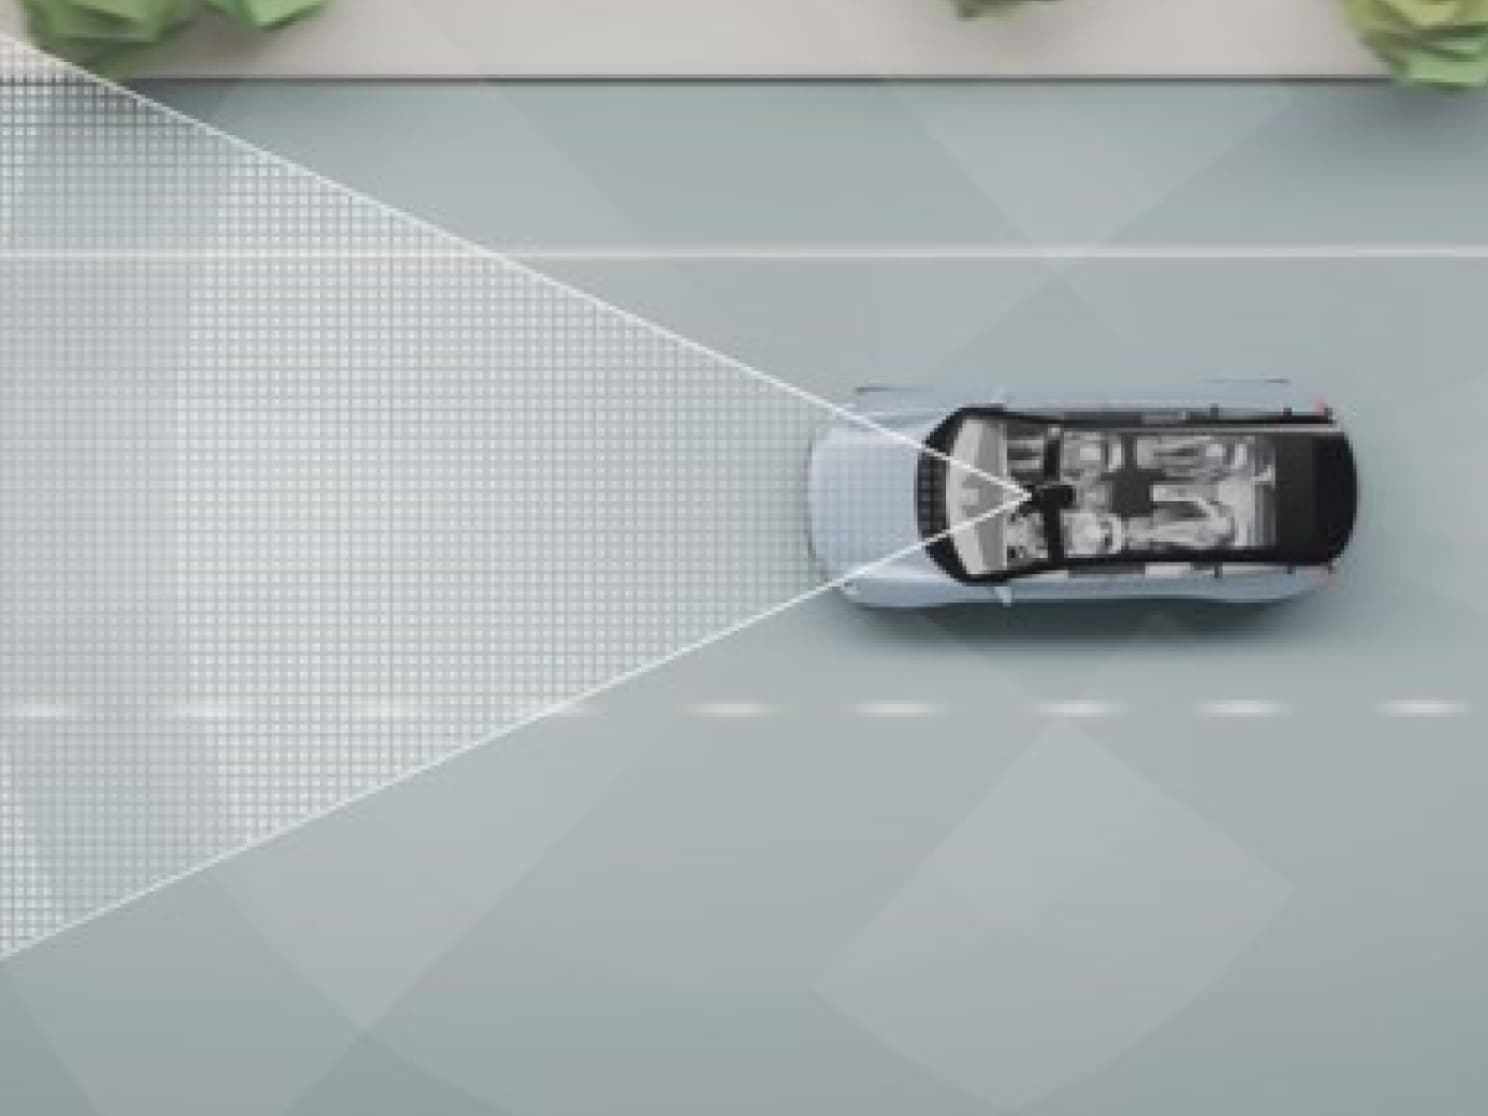 Digitalni prikaz automobila na cesti s trakama i drugim objektima.